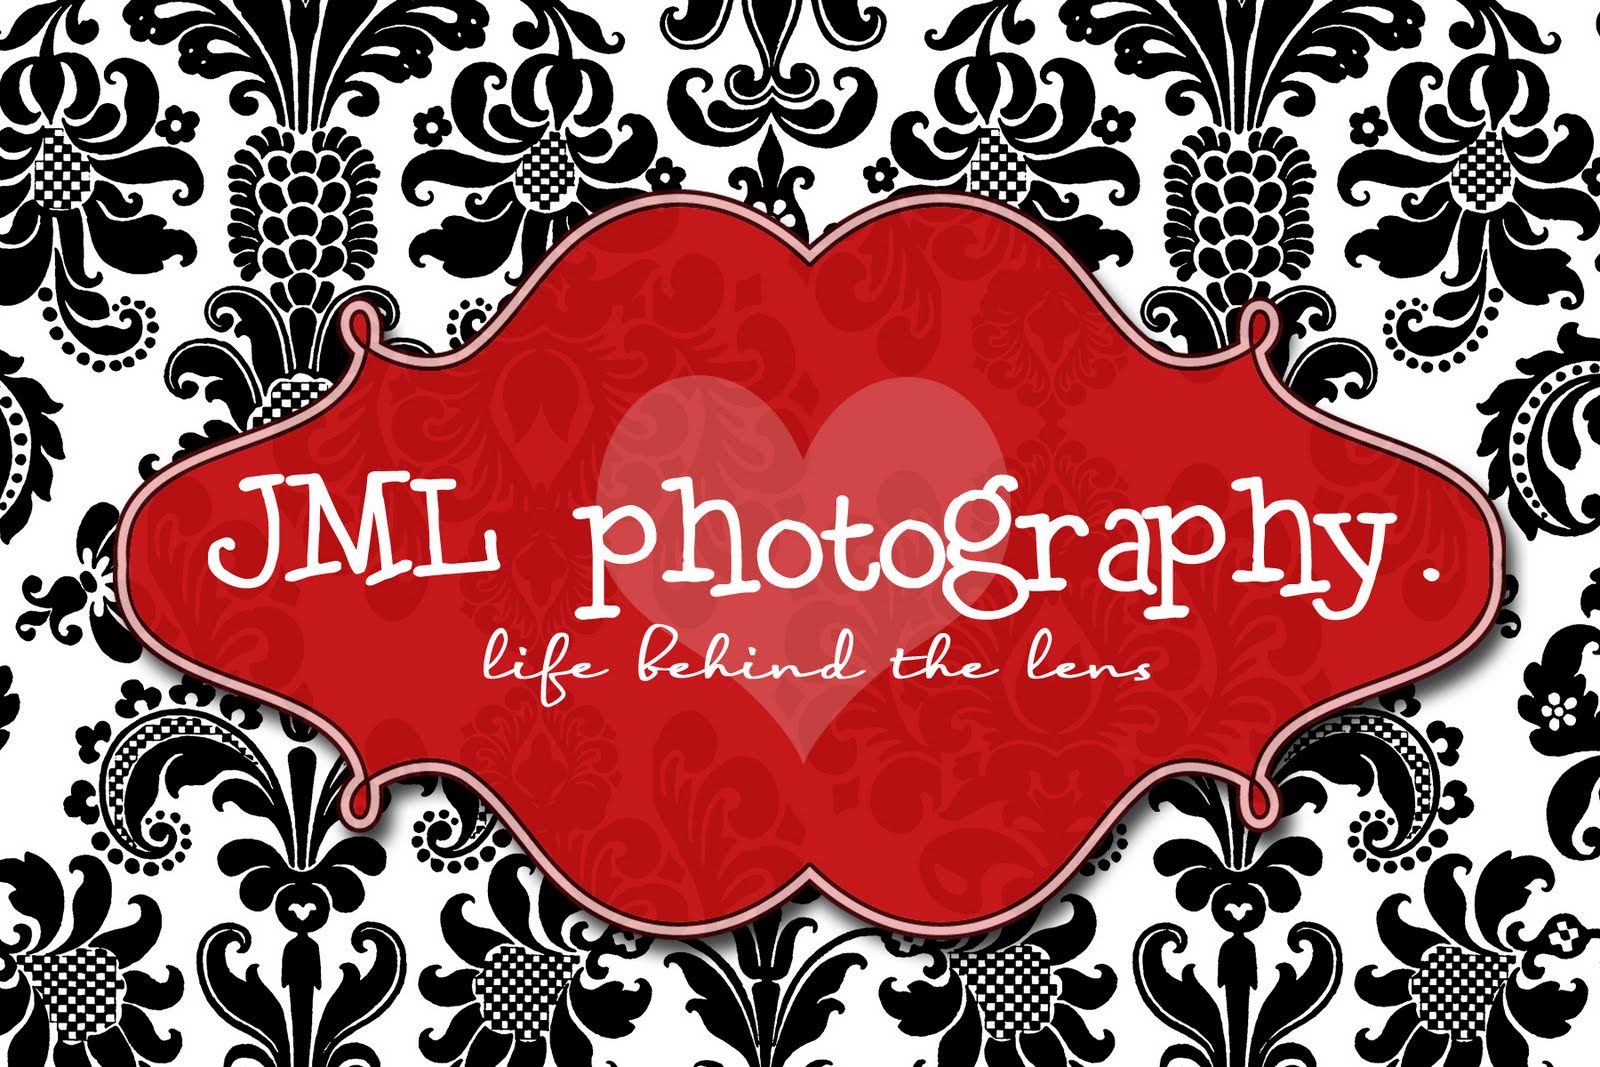 JML Photography